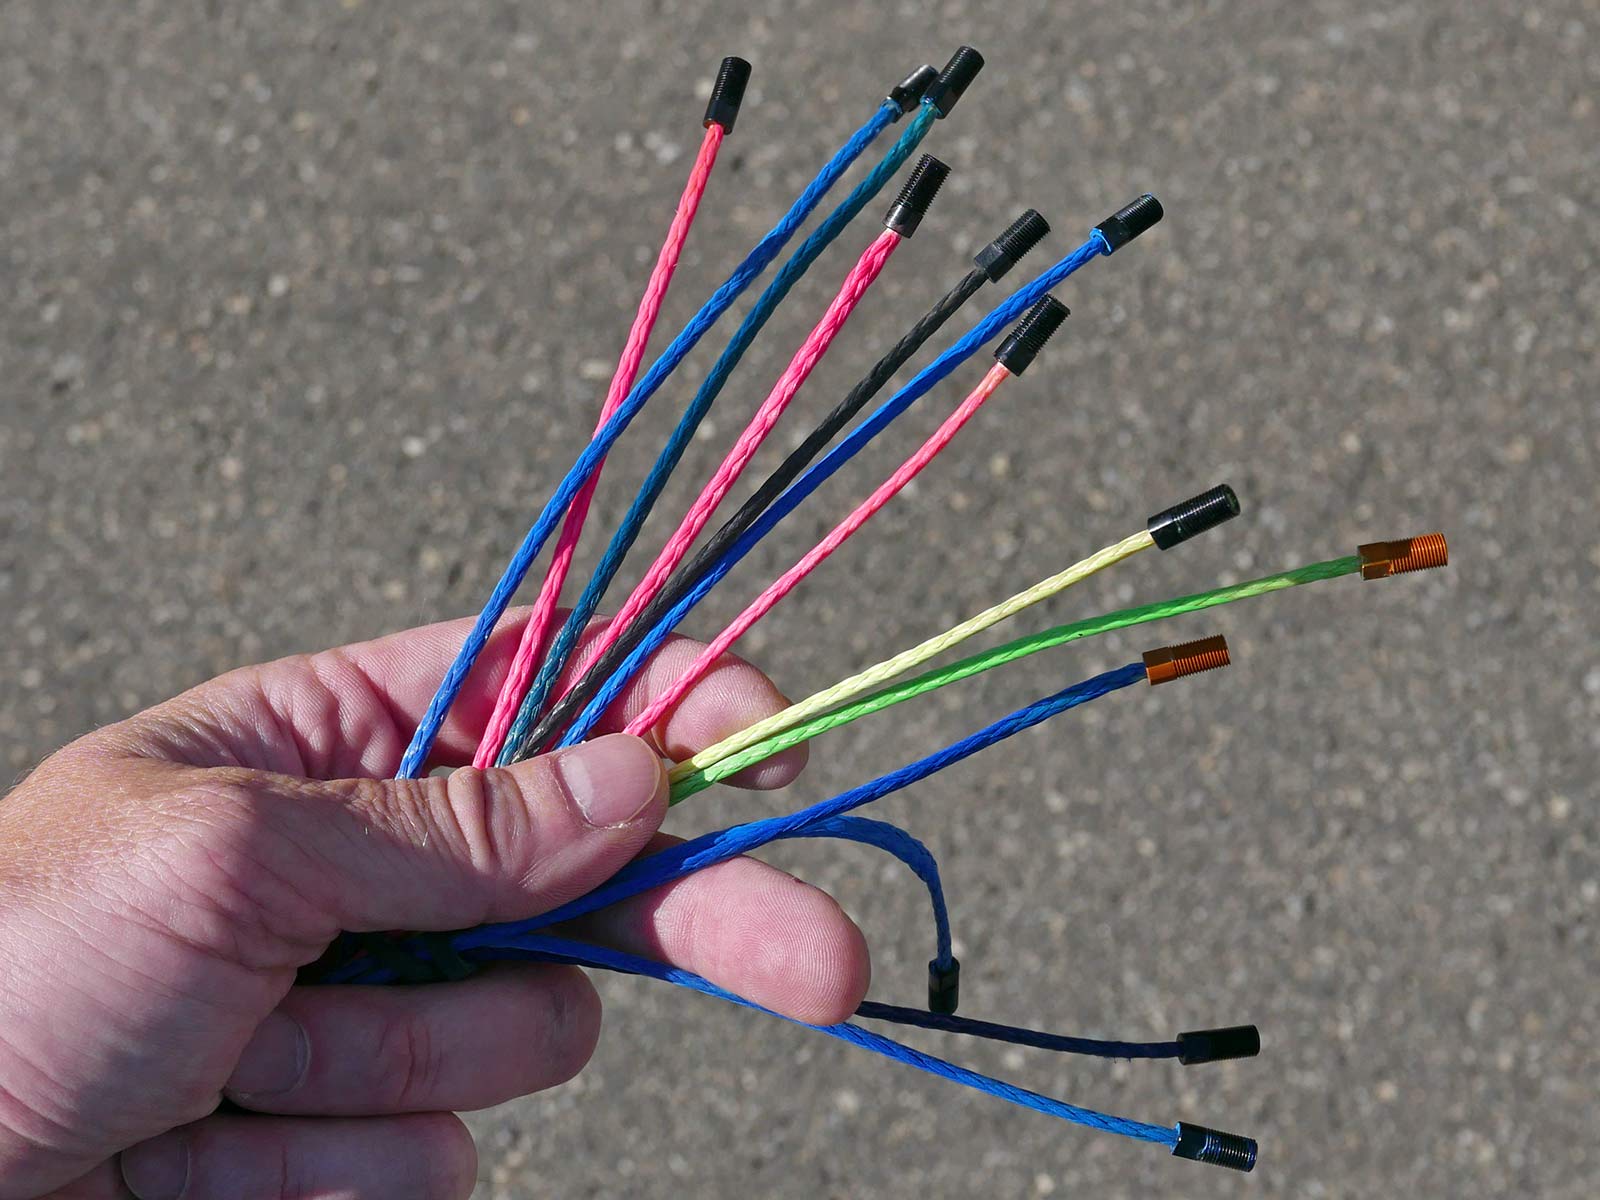 Pi Rope rainbow ultralight braided Vectran fiber spoke wheels